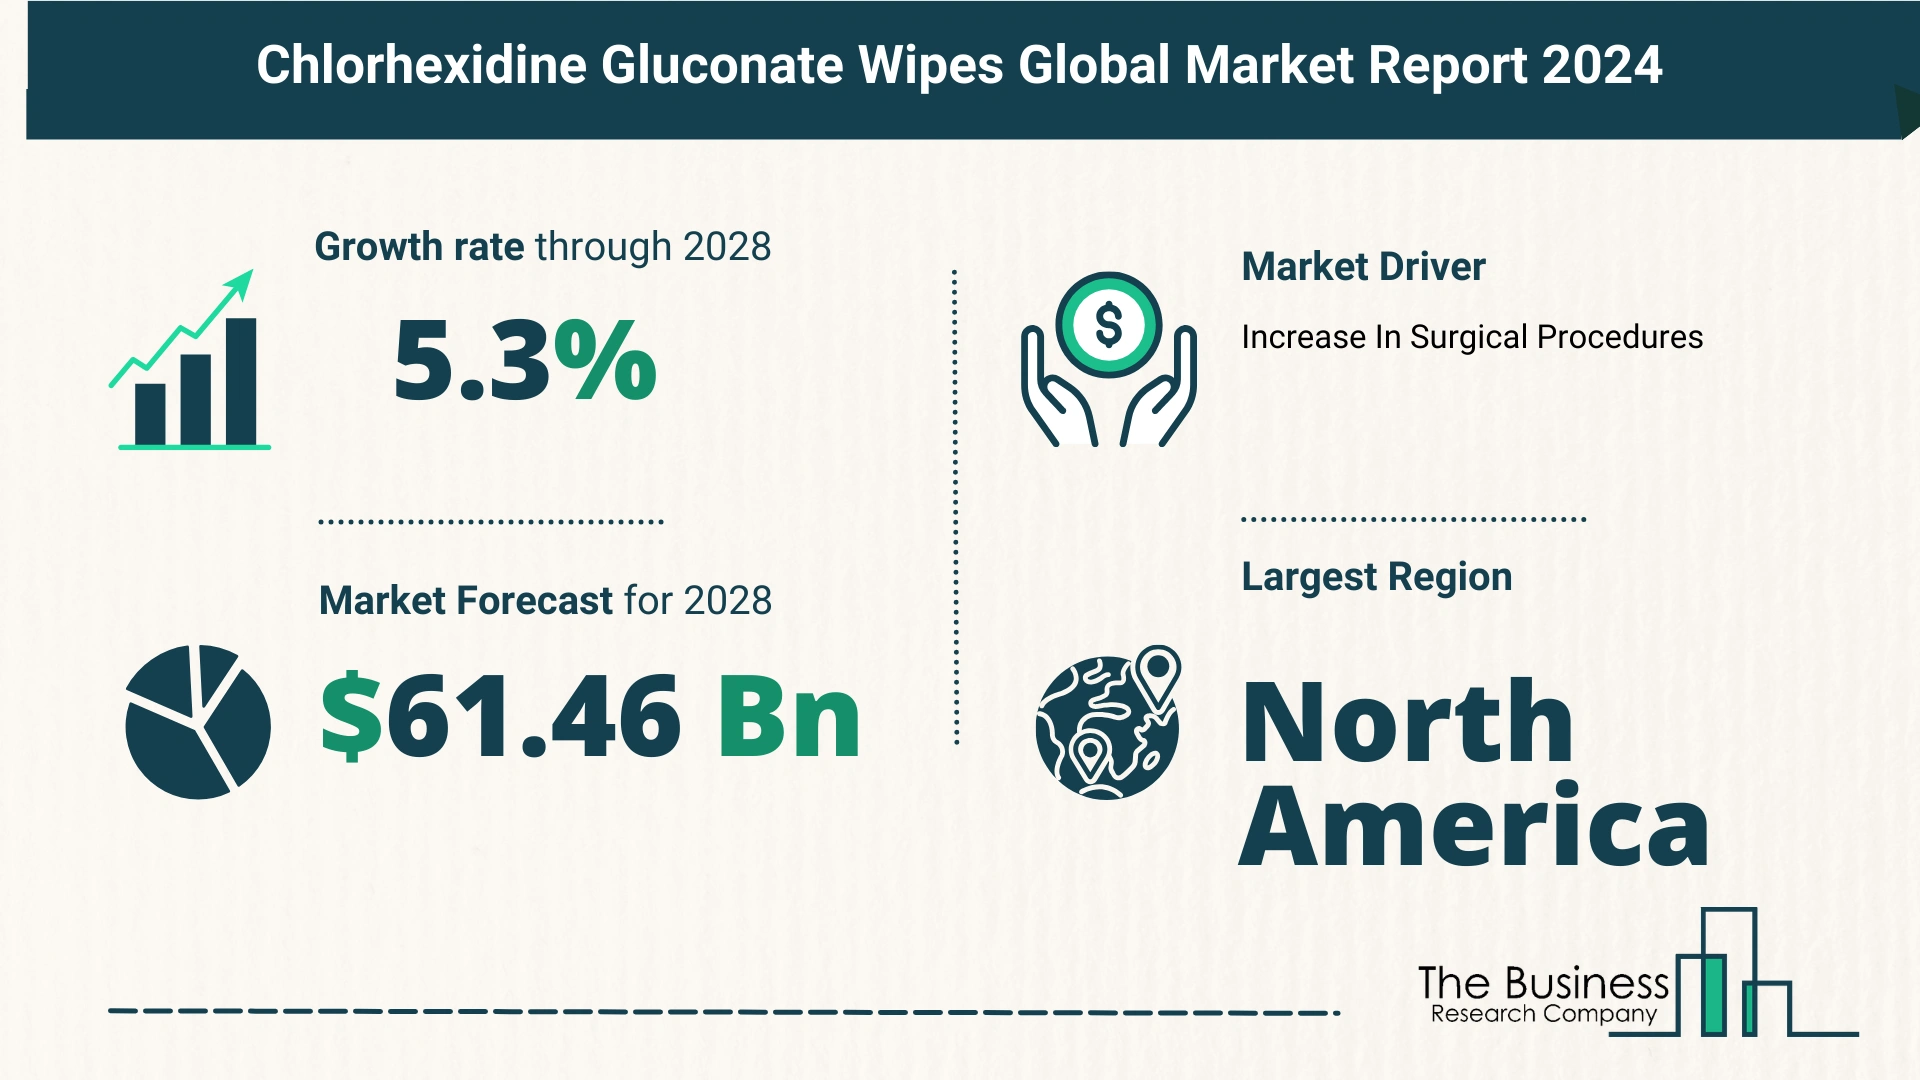 Global Chlorhexidine Gluconate (CHG) Wipes Market Size